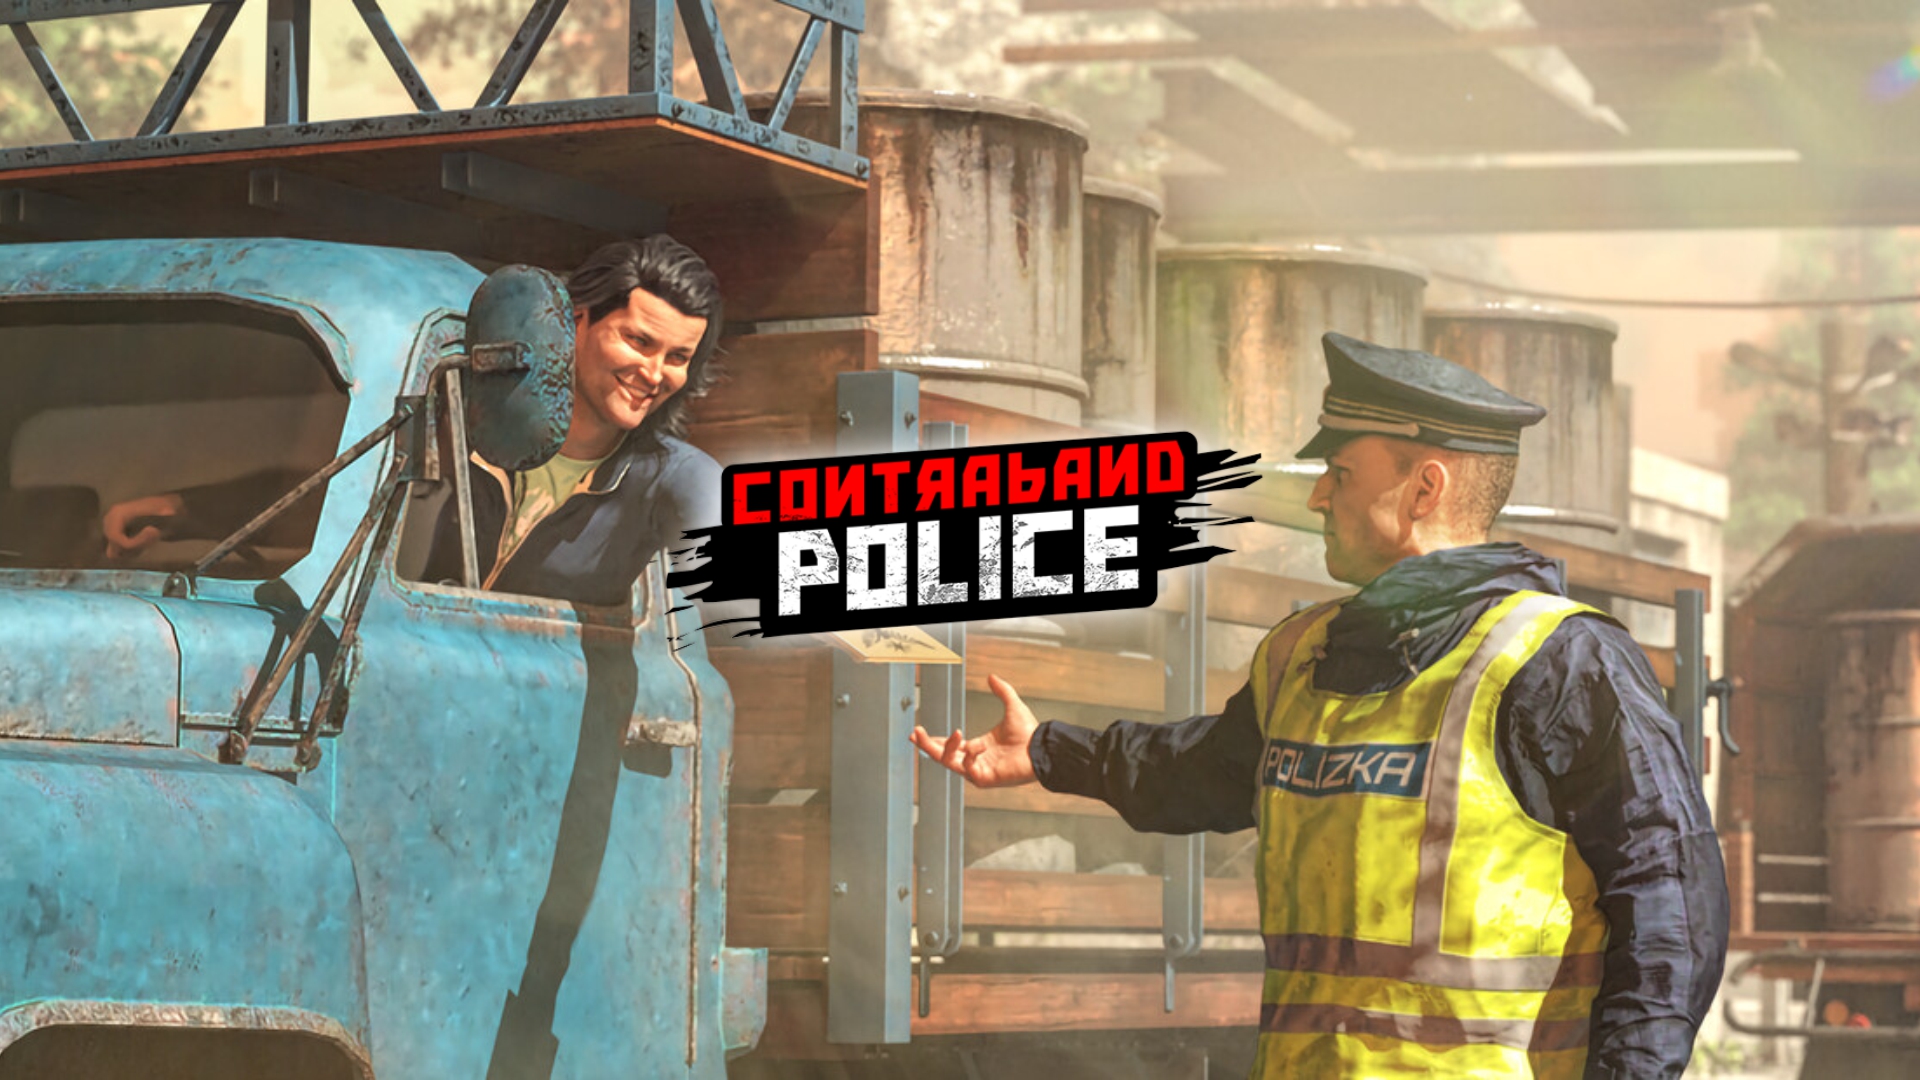 Contraband Police - Novo Simulador Incrível! 